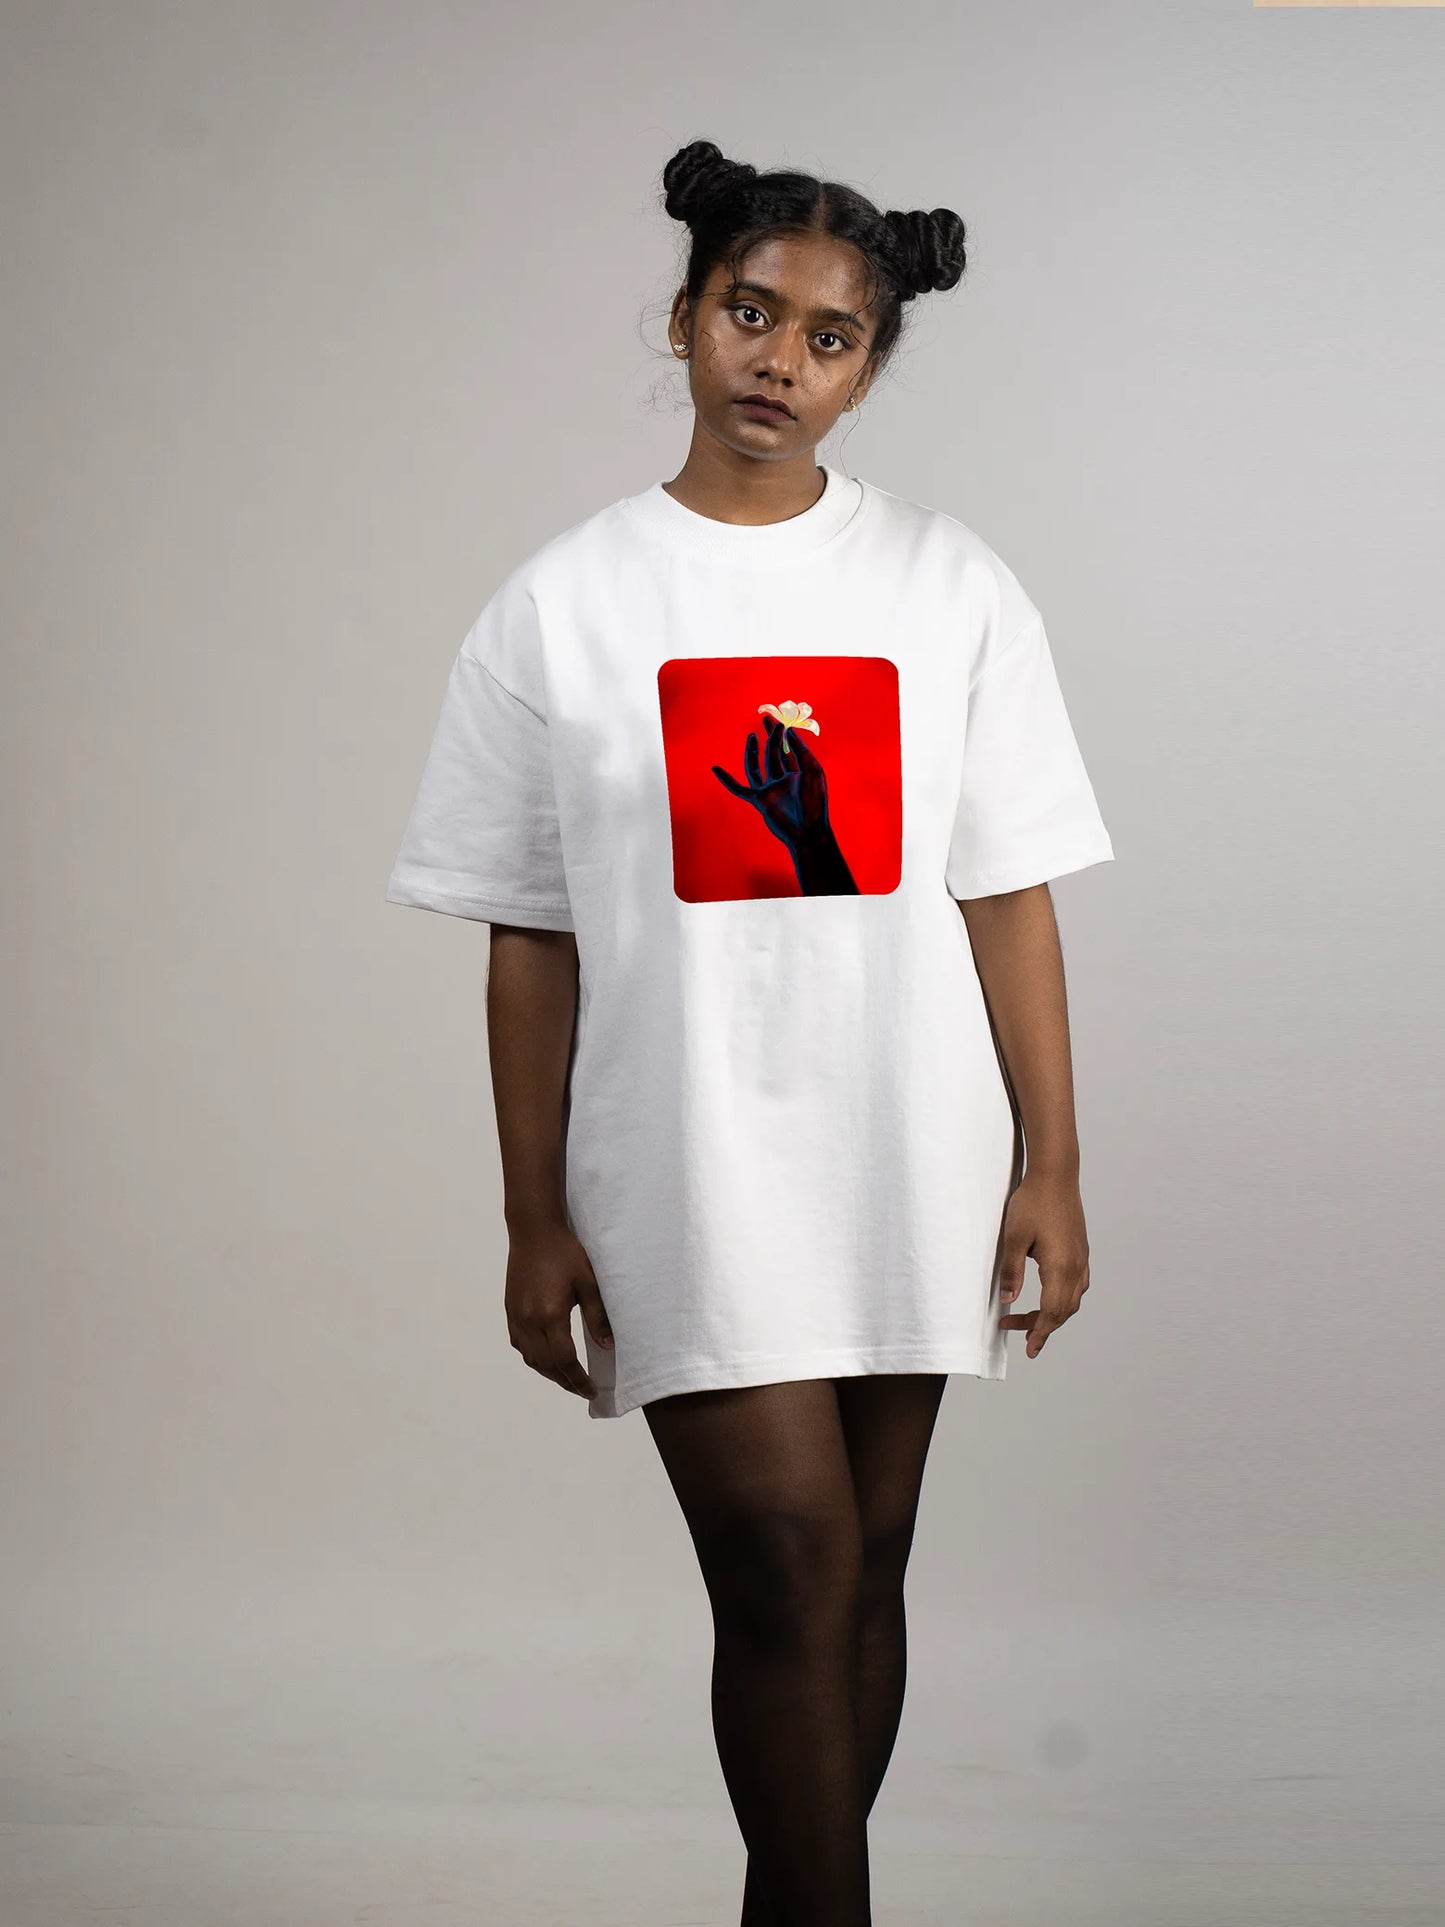 Buy Plumeria oversized /Boxy FIT t shirt online